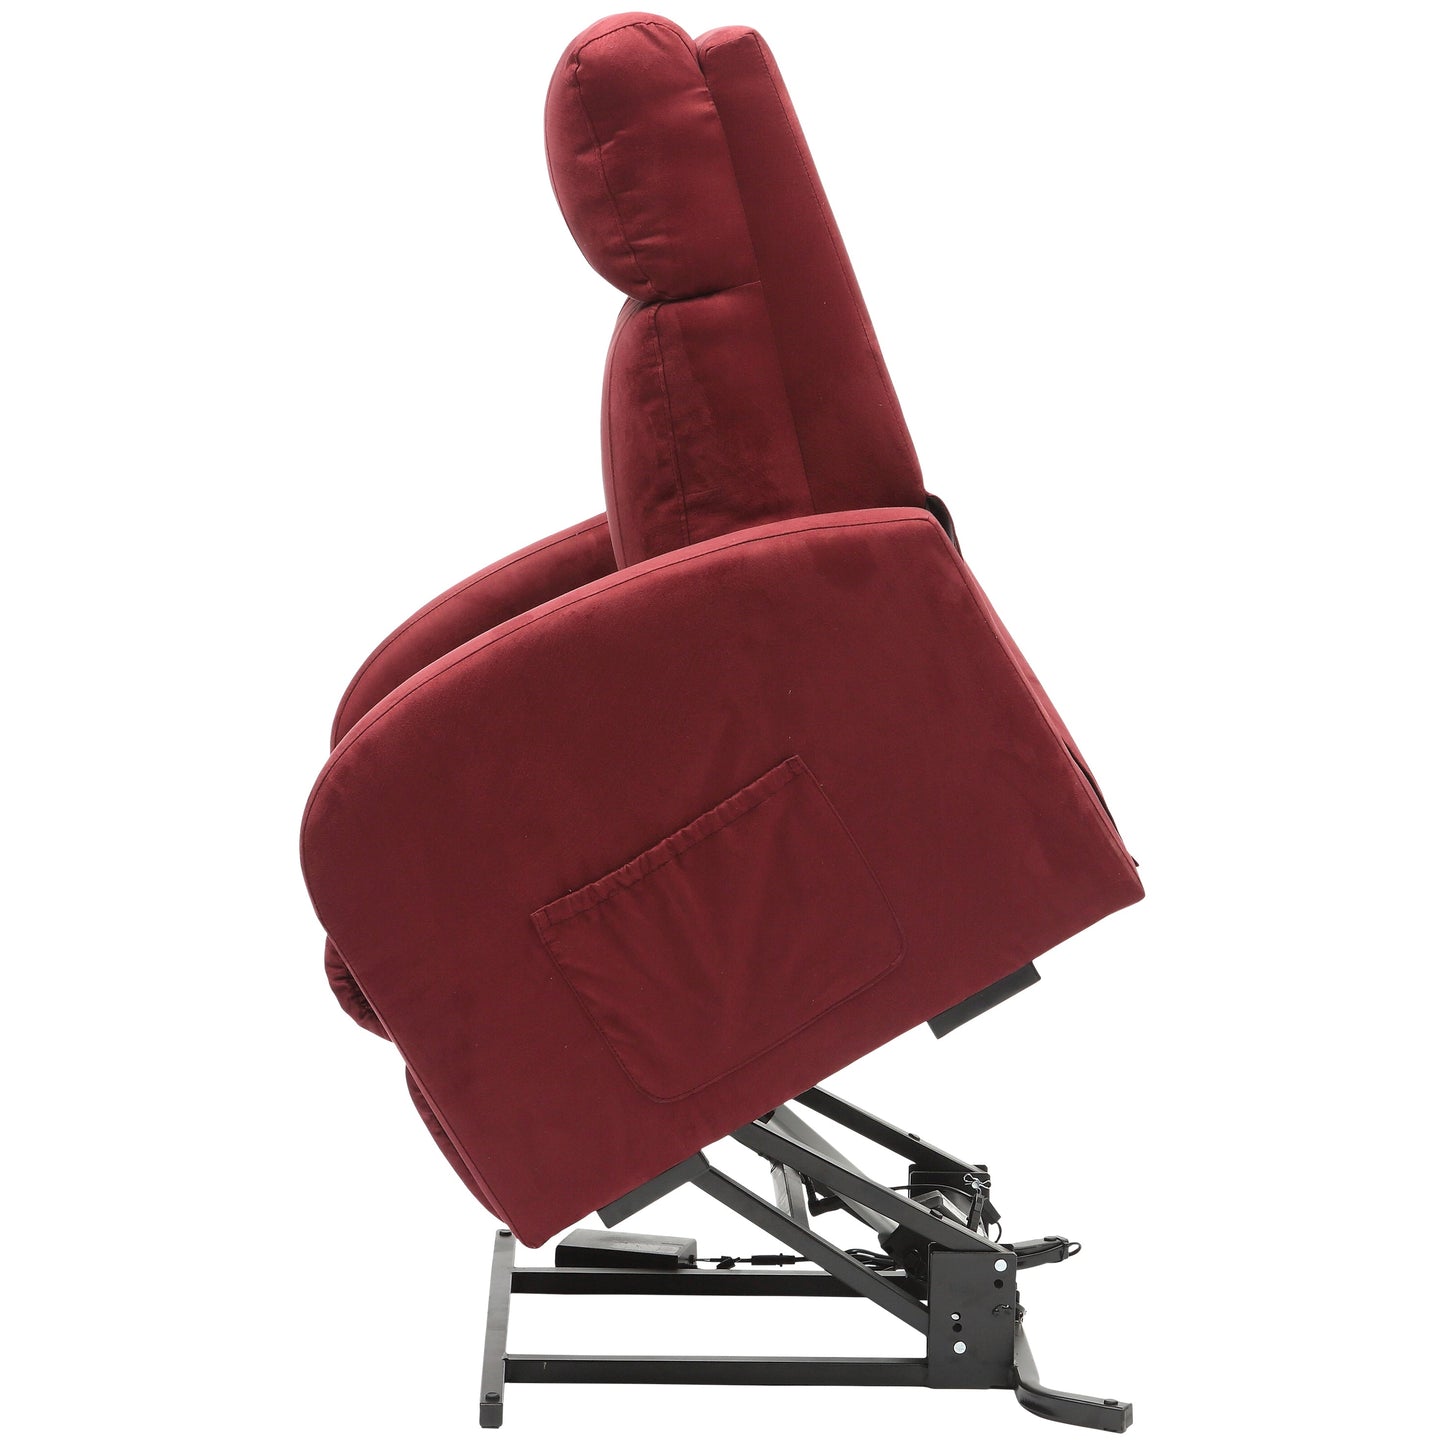 Daresbury Single Motor Rise and Recline Chair